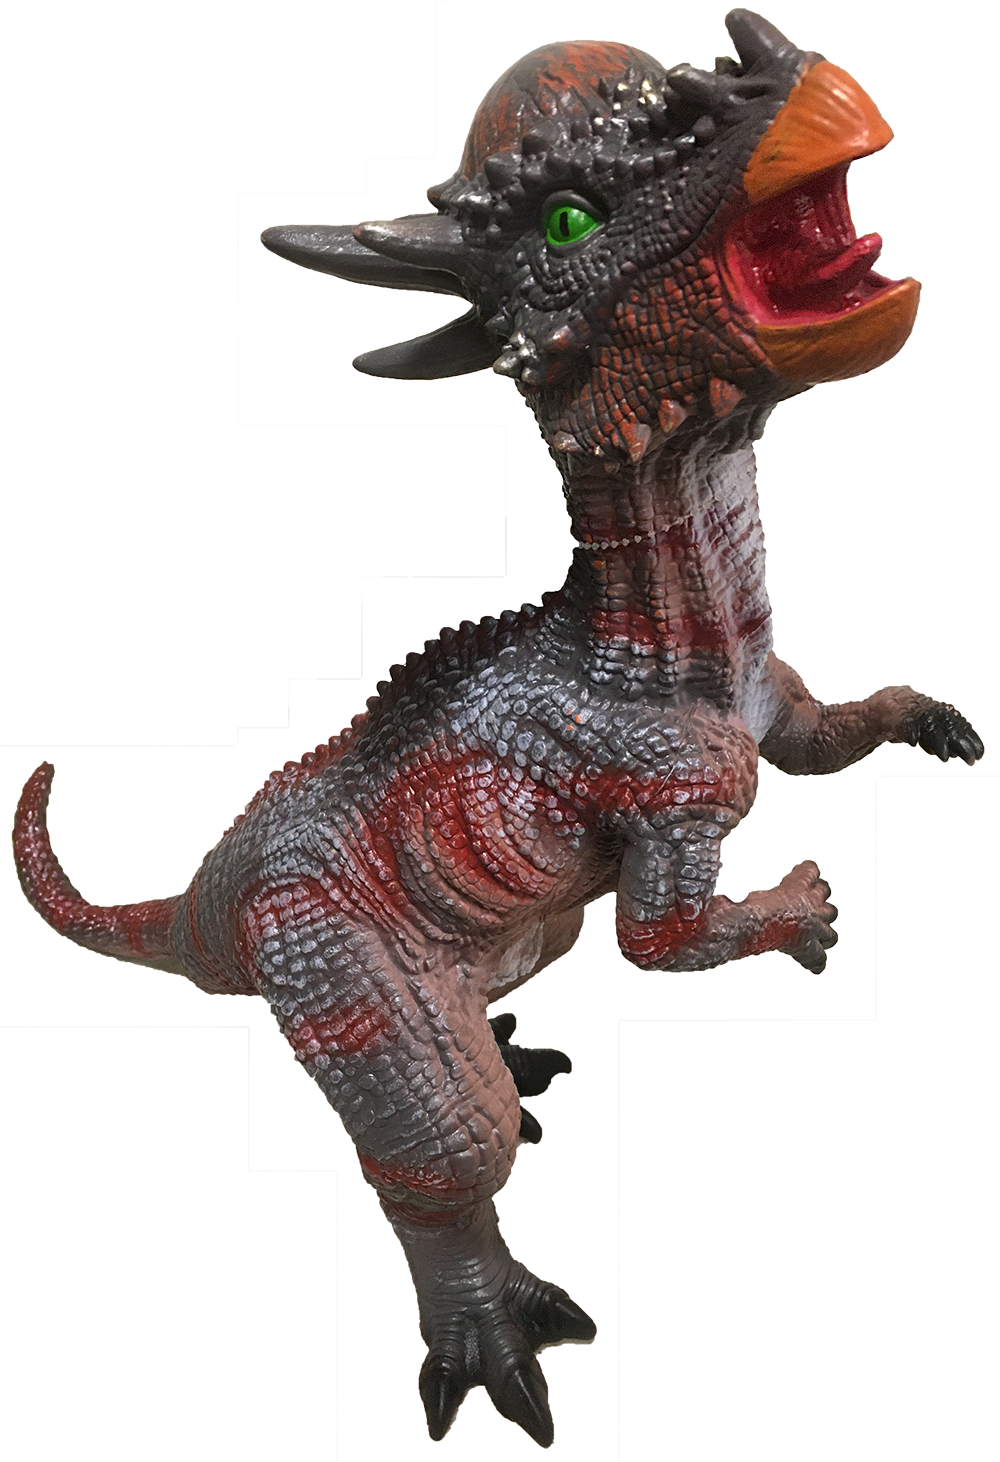 Pacycephalosaurus 22" Vinyl Dinosaur Figurine with Sound Effects